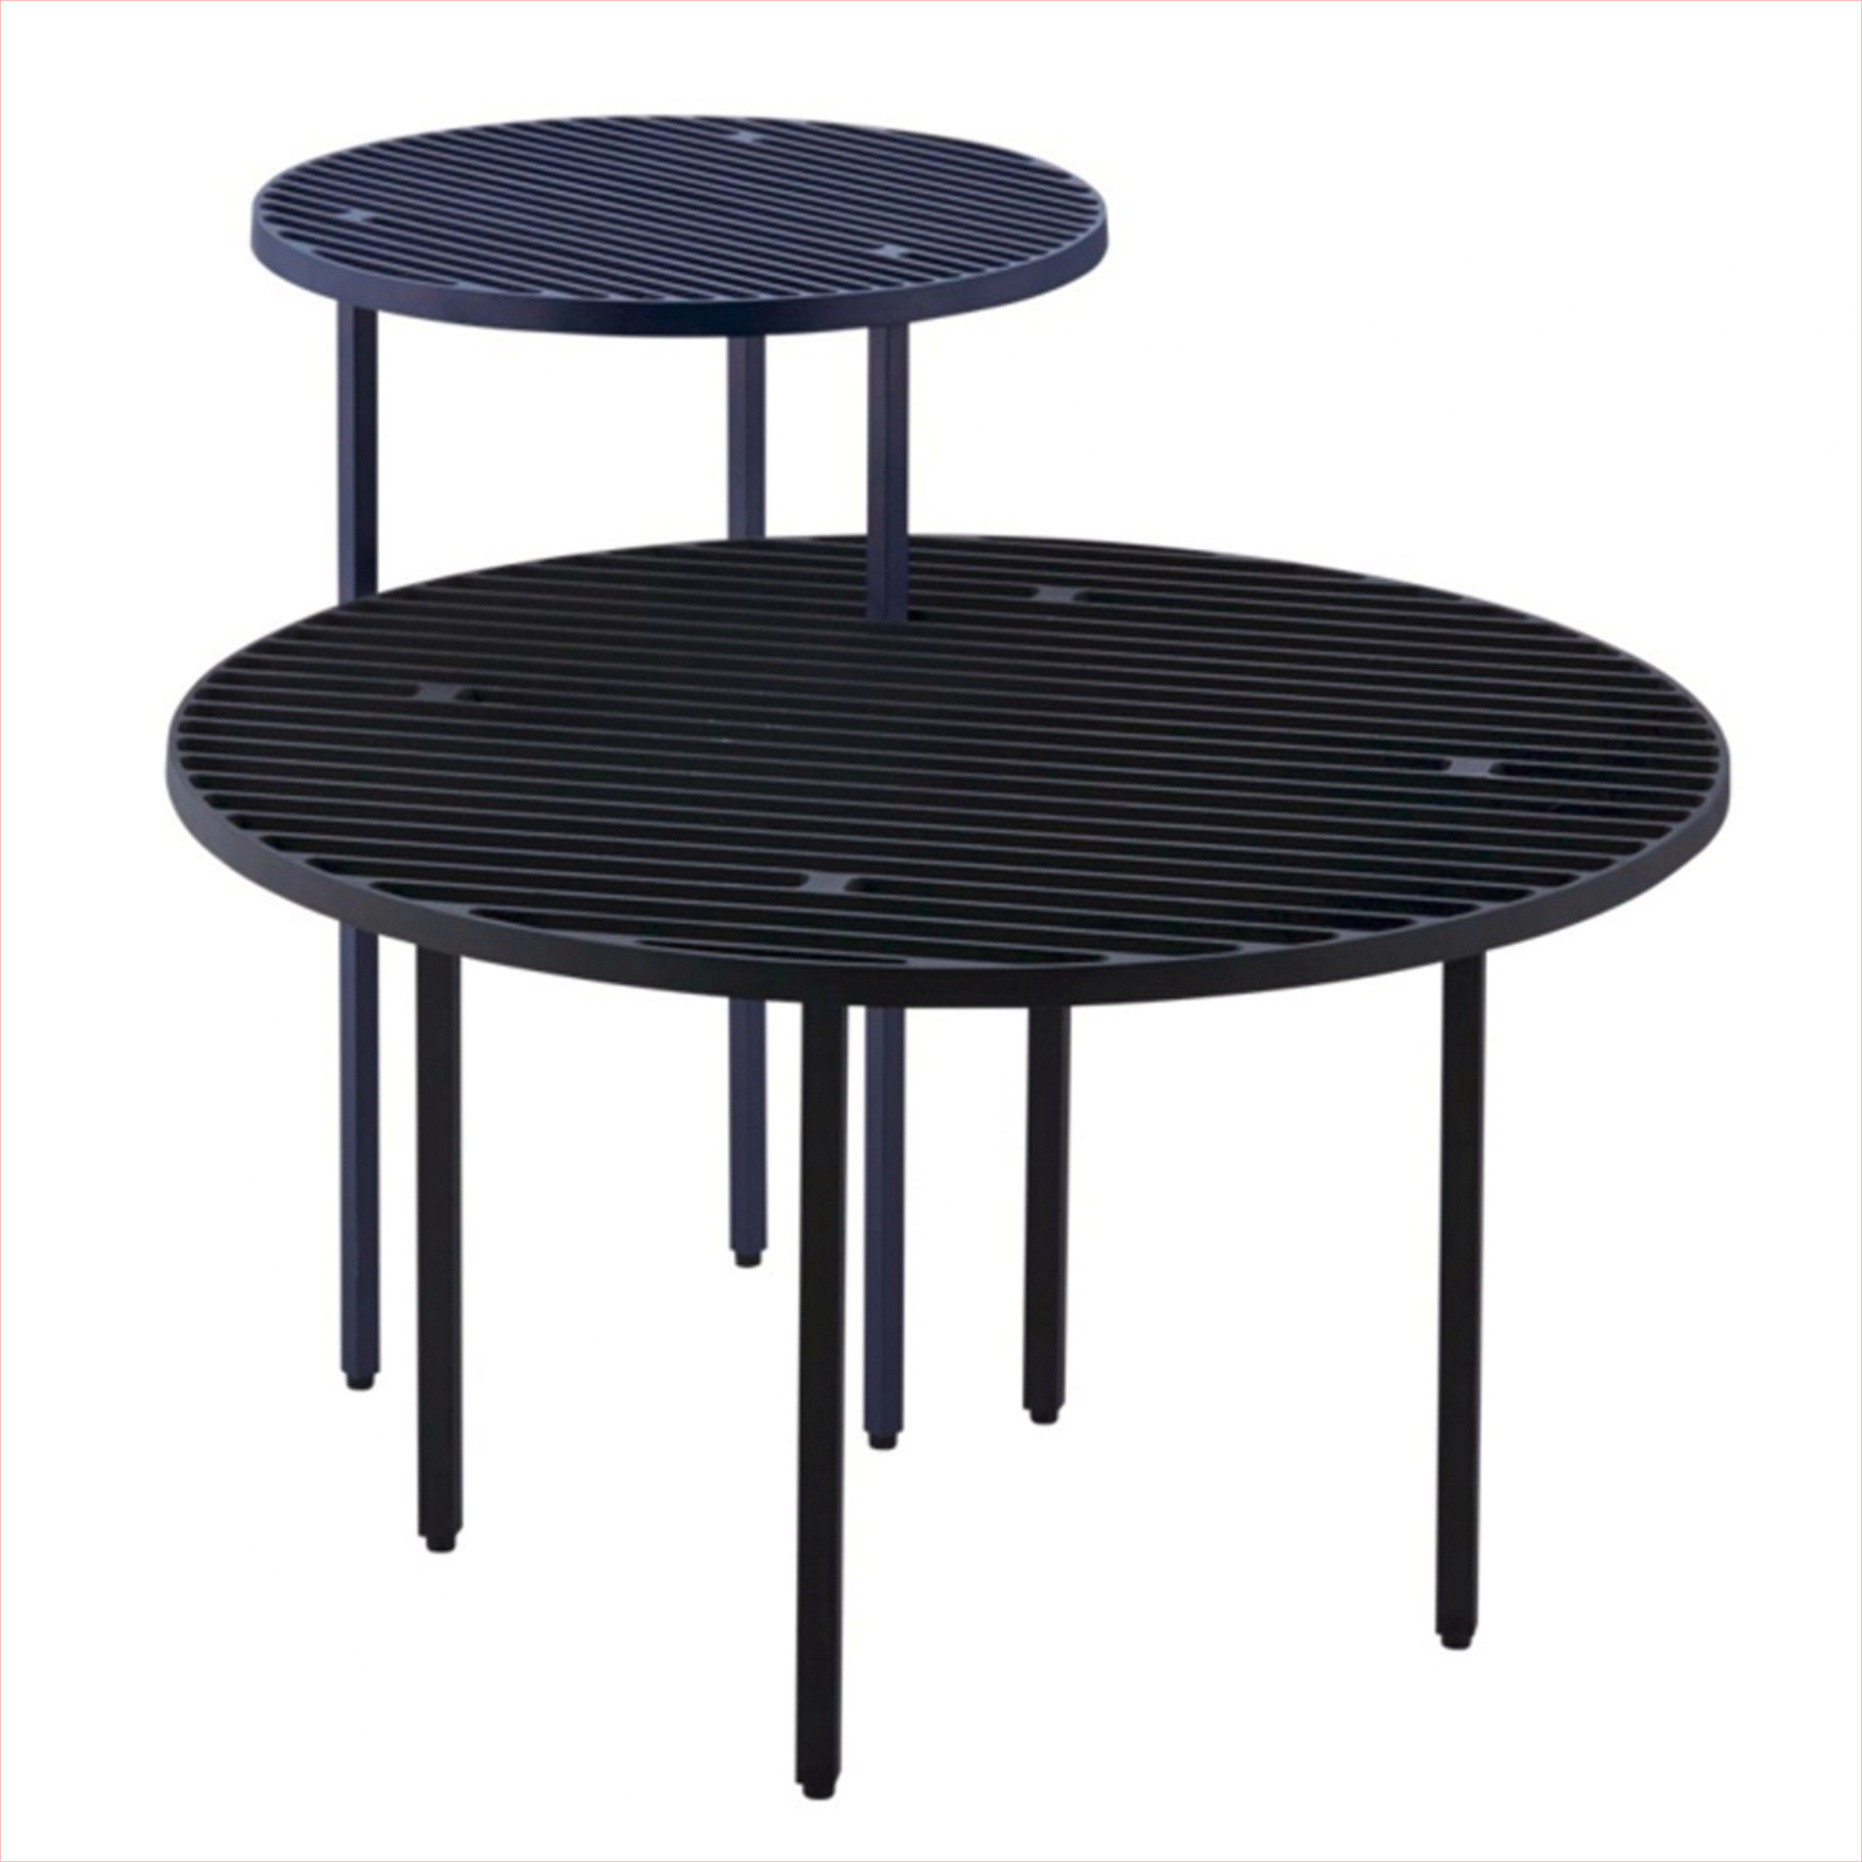 table basse ronde verre et bois tete de lit basse table basse metal ronde chaise coquille 0d of table basse ronde verre et bois